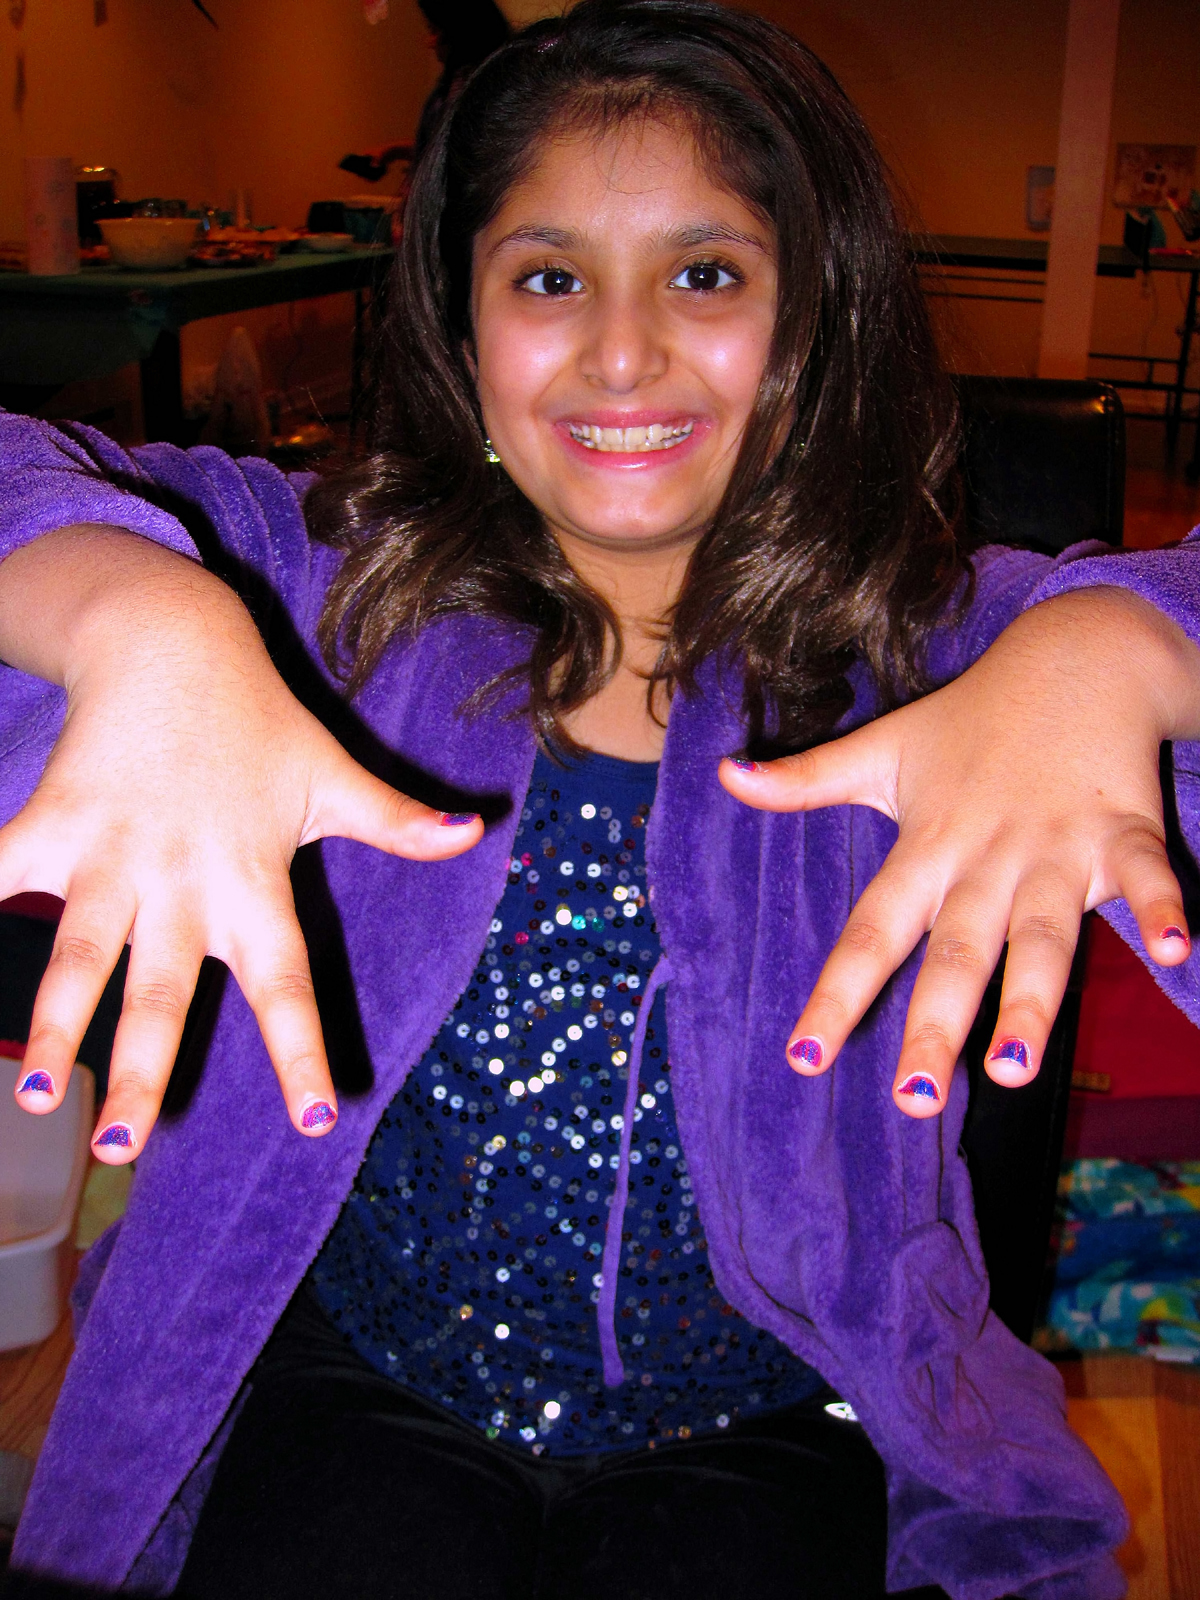 She Loves Her Home Girls Spa Mini Manicure! 